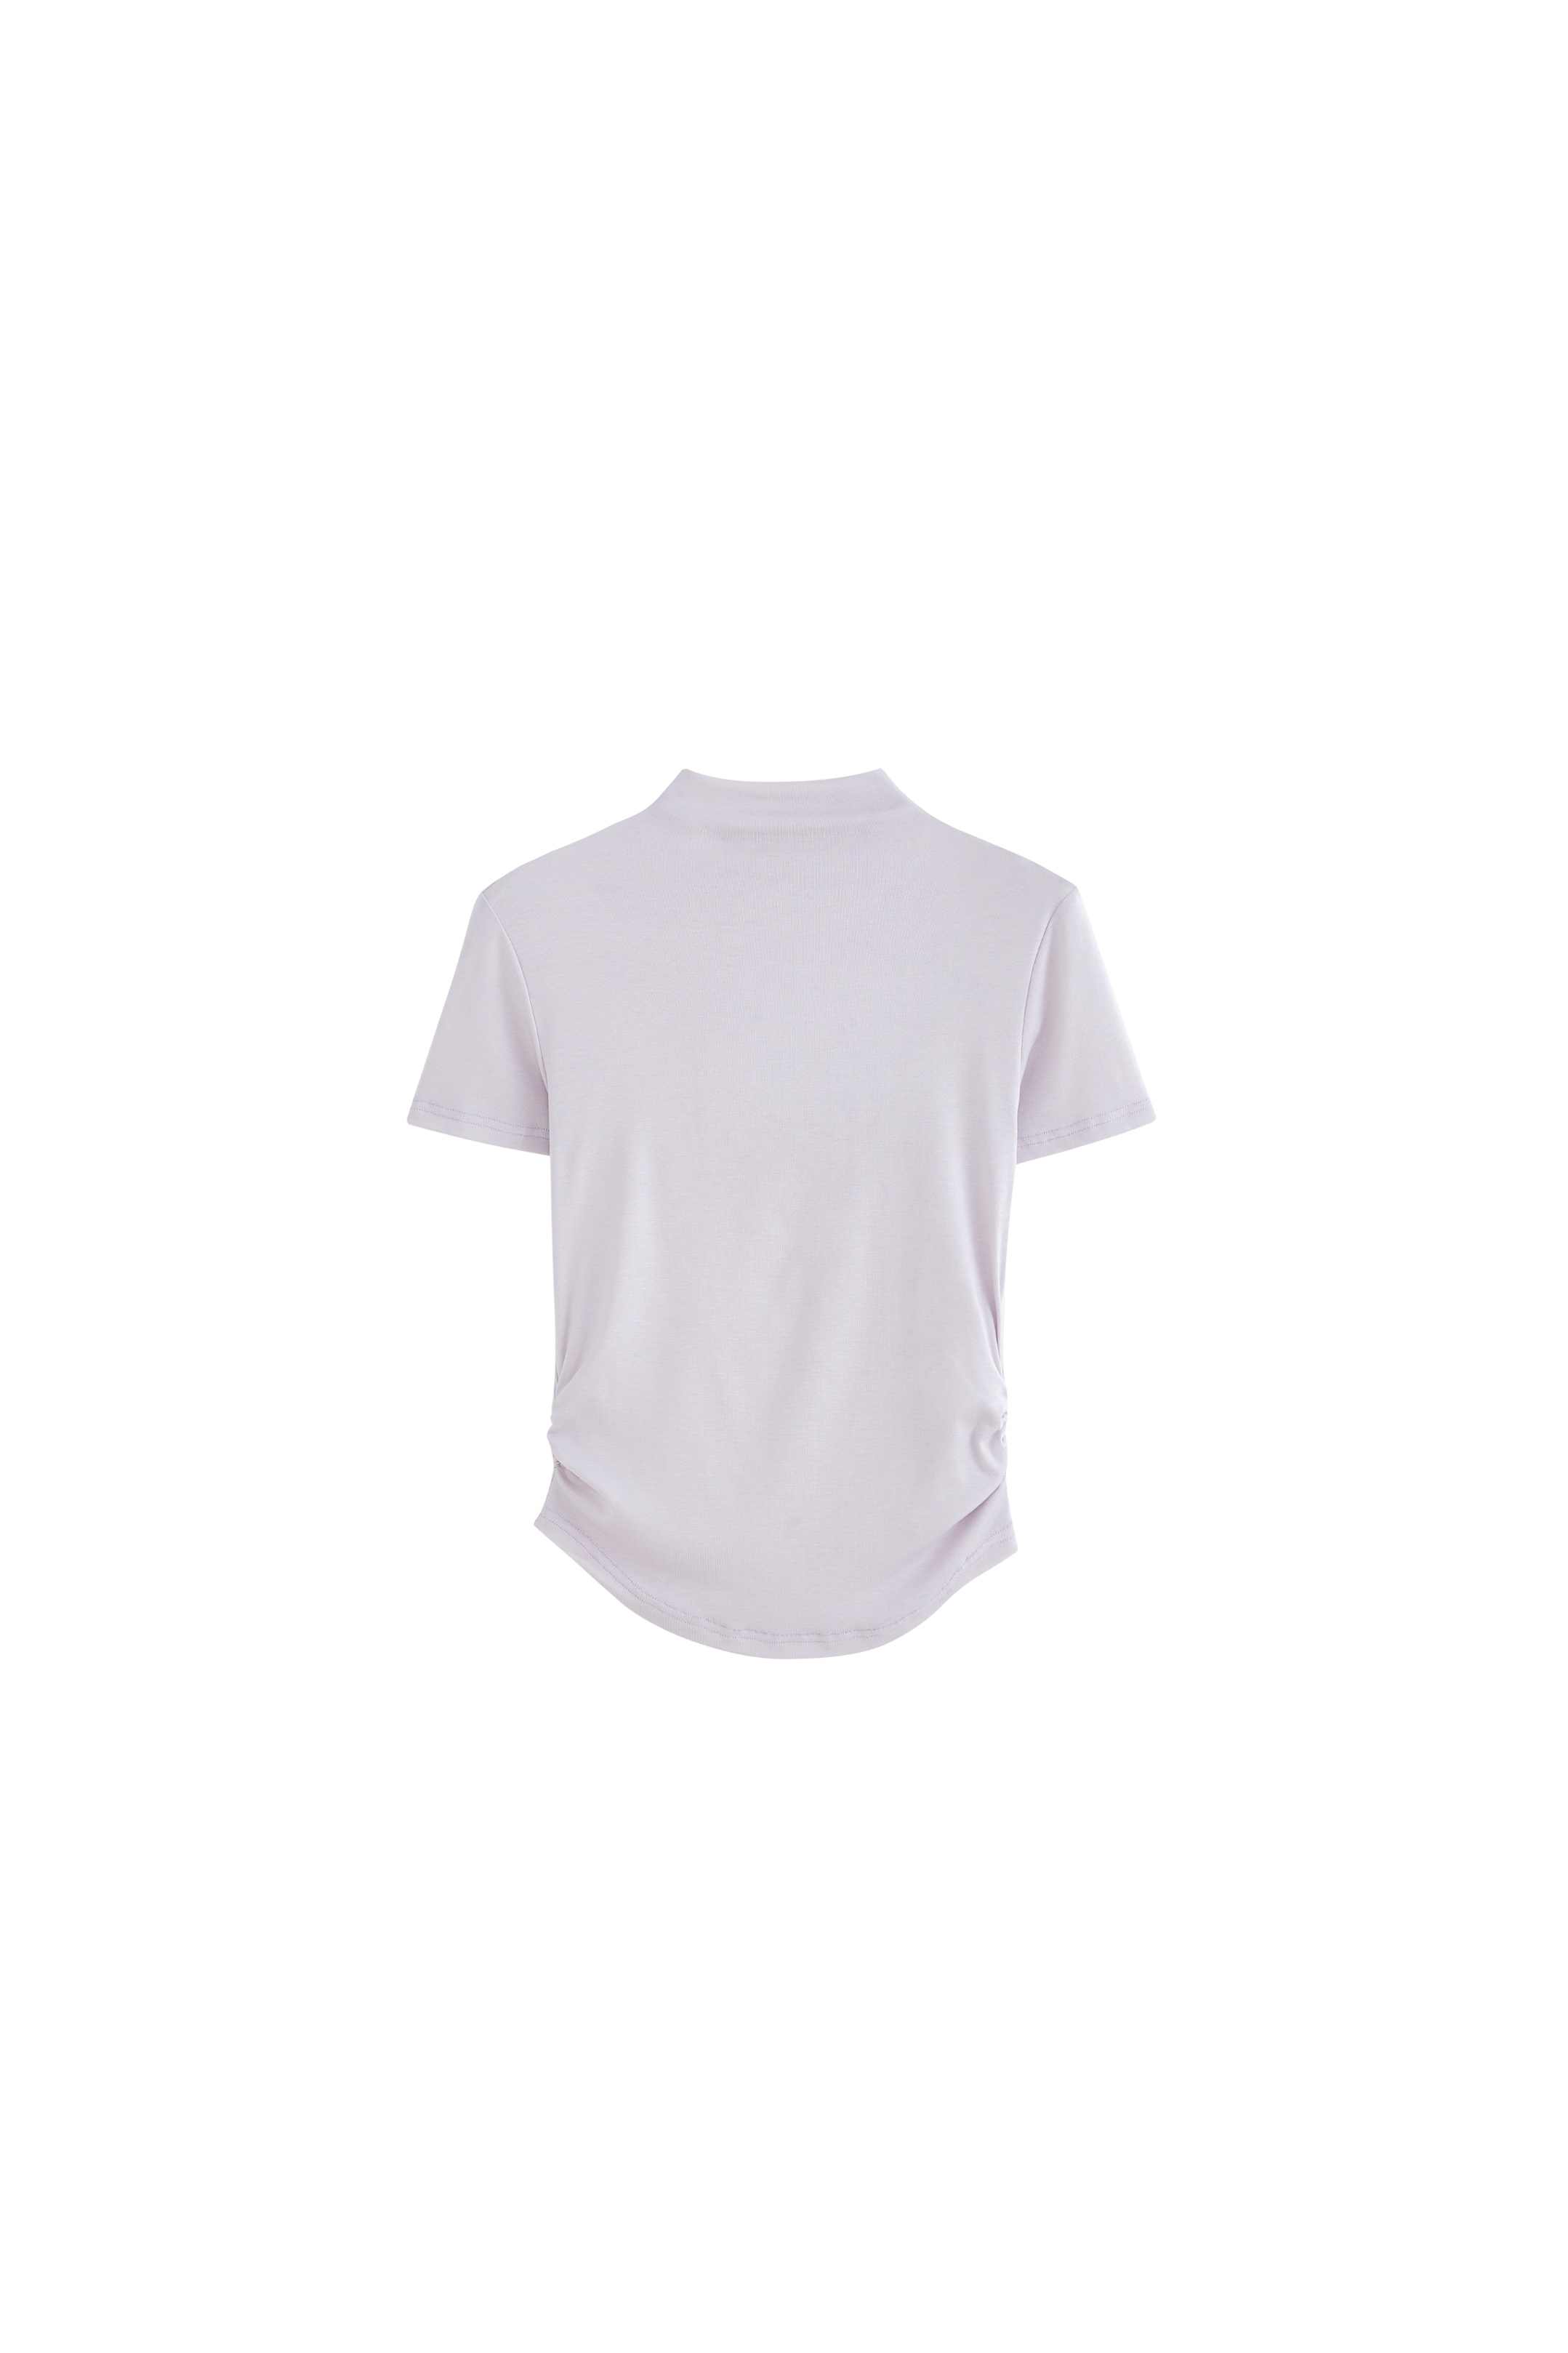 SIDE GATHERED SOFT T-SHIRT / サイドギャザーソフトTシャツ